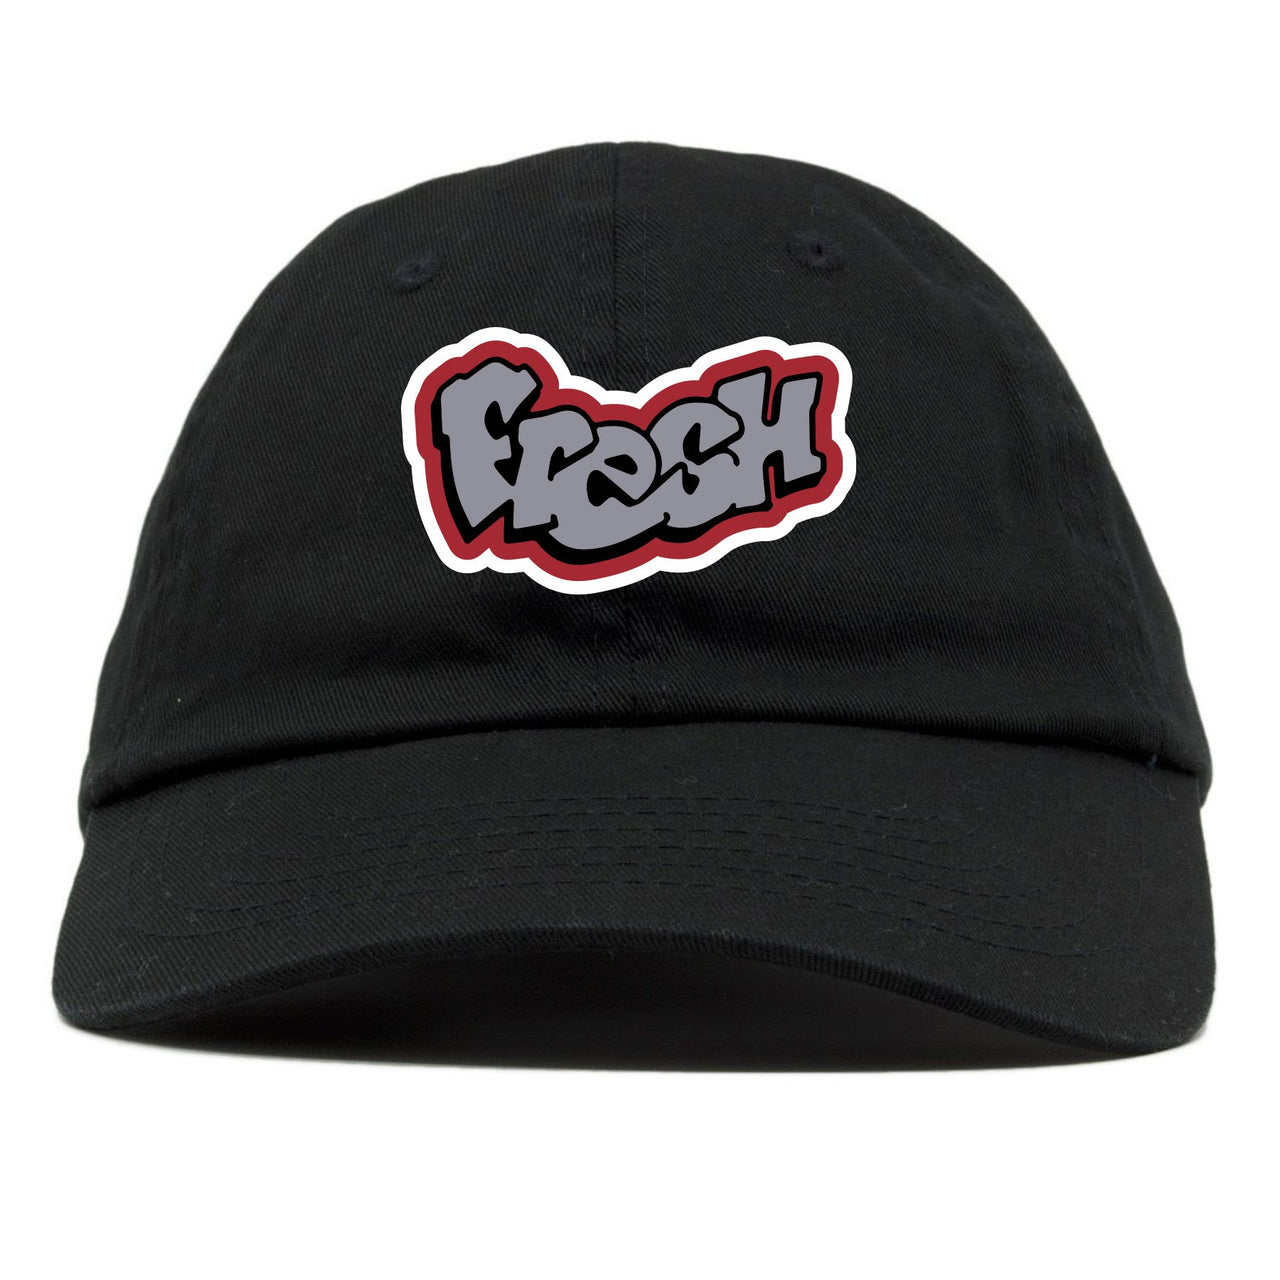 Bred 2019 4s Dad Hat | Fresh Logo, Black